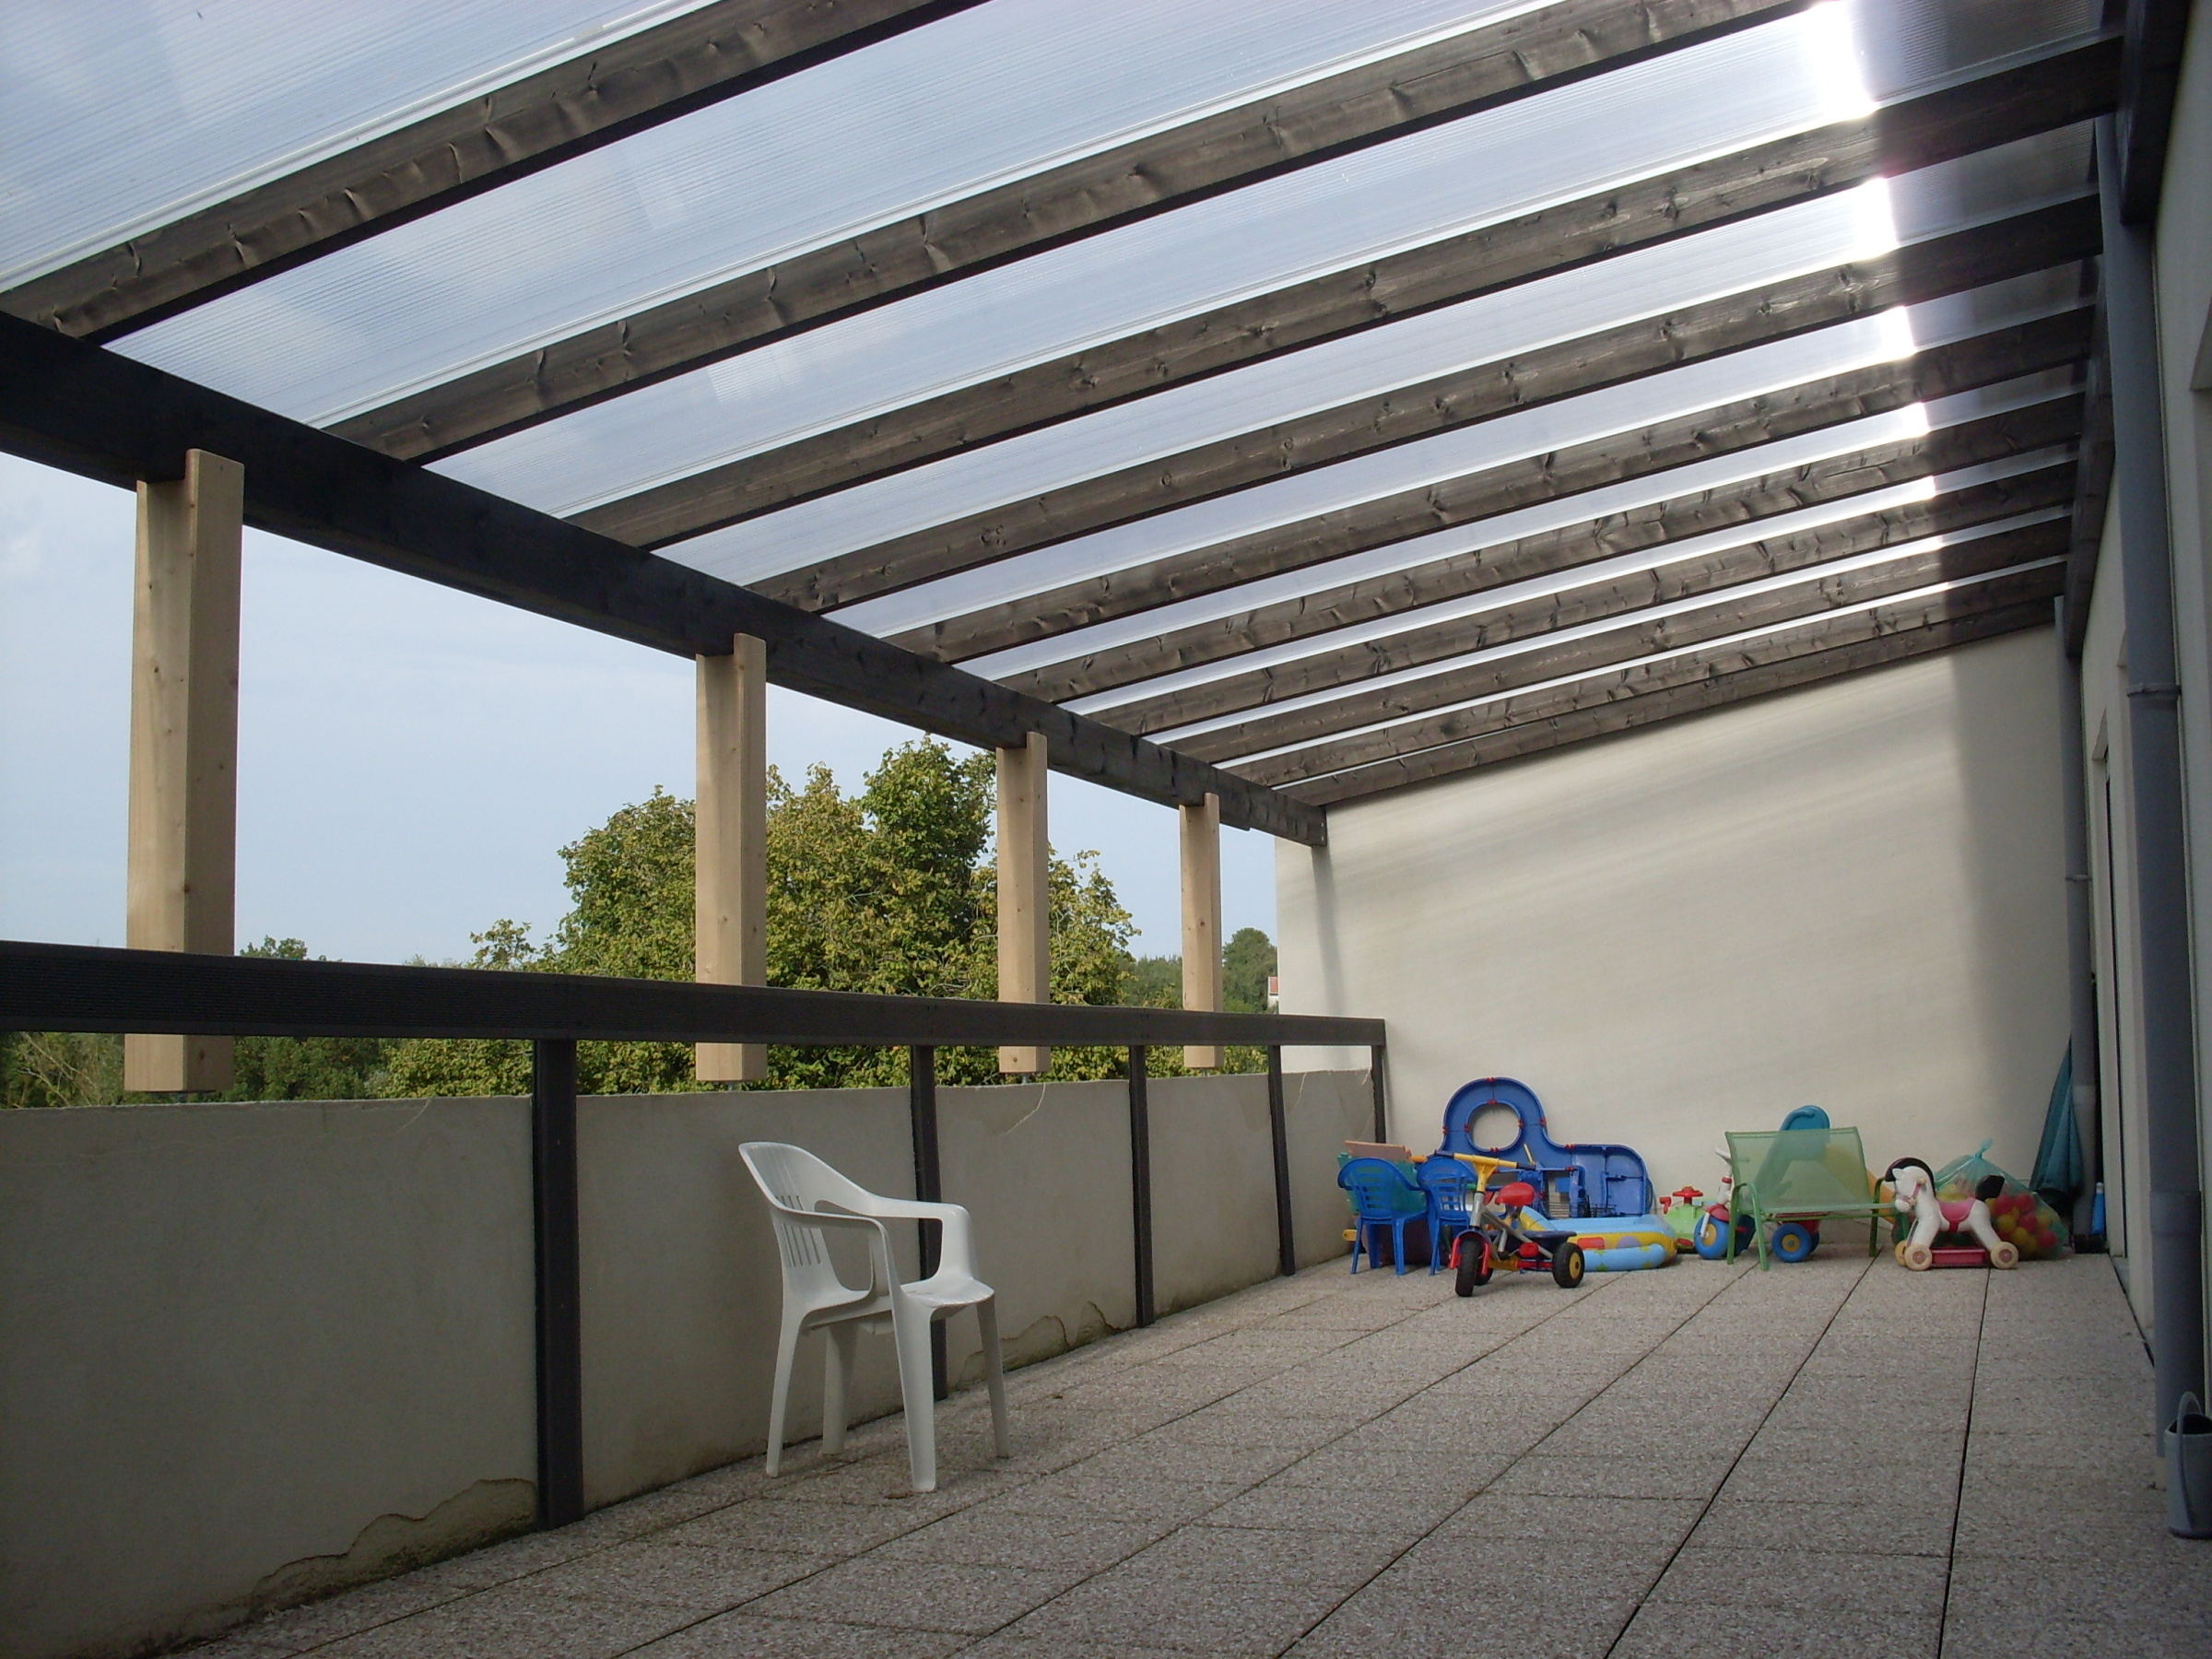 Terrasse Couverte Image - Mailleraye.fr Jardin destiné Salon De Jardin Carrefour Dans La Réunion